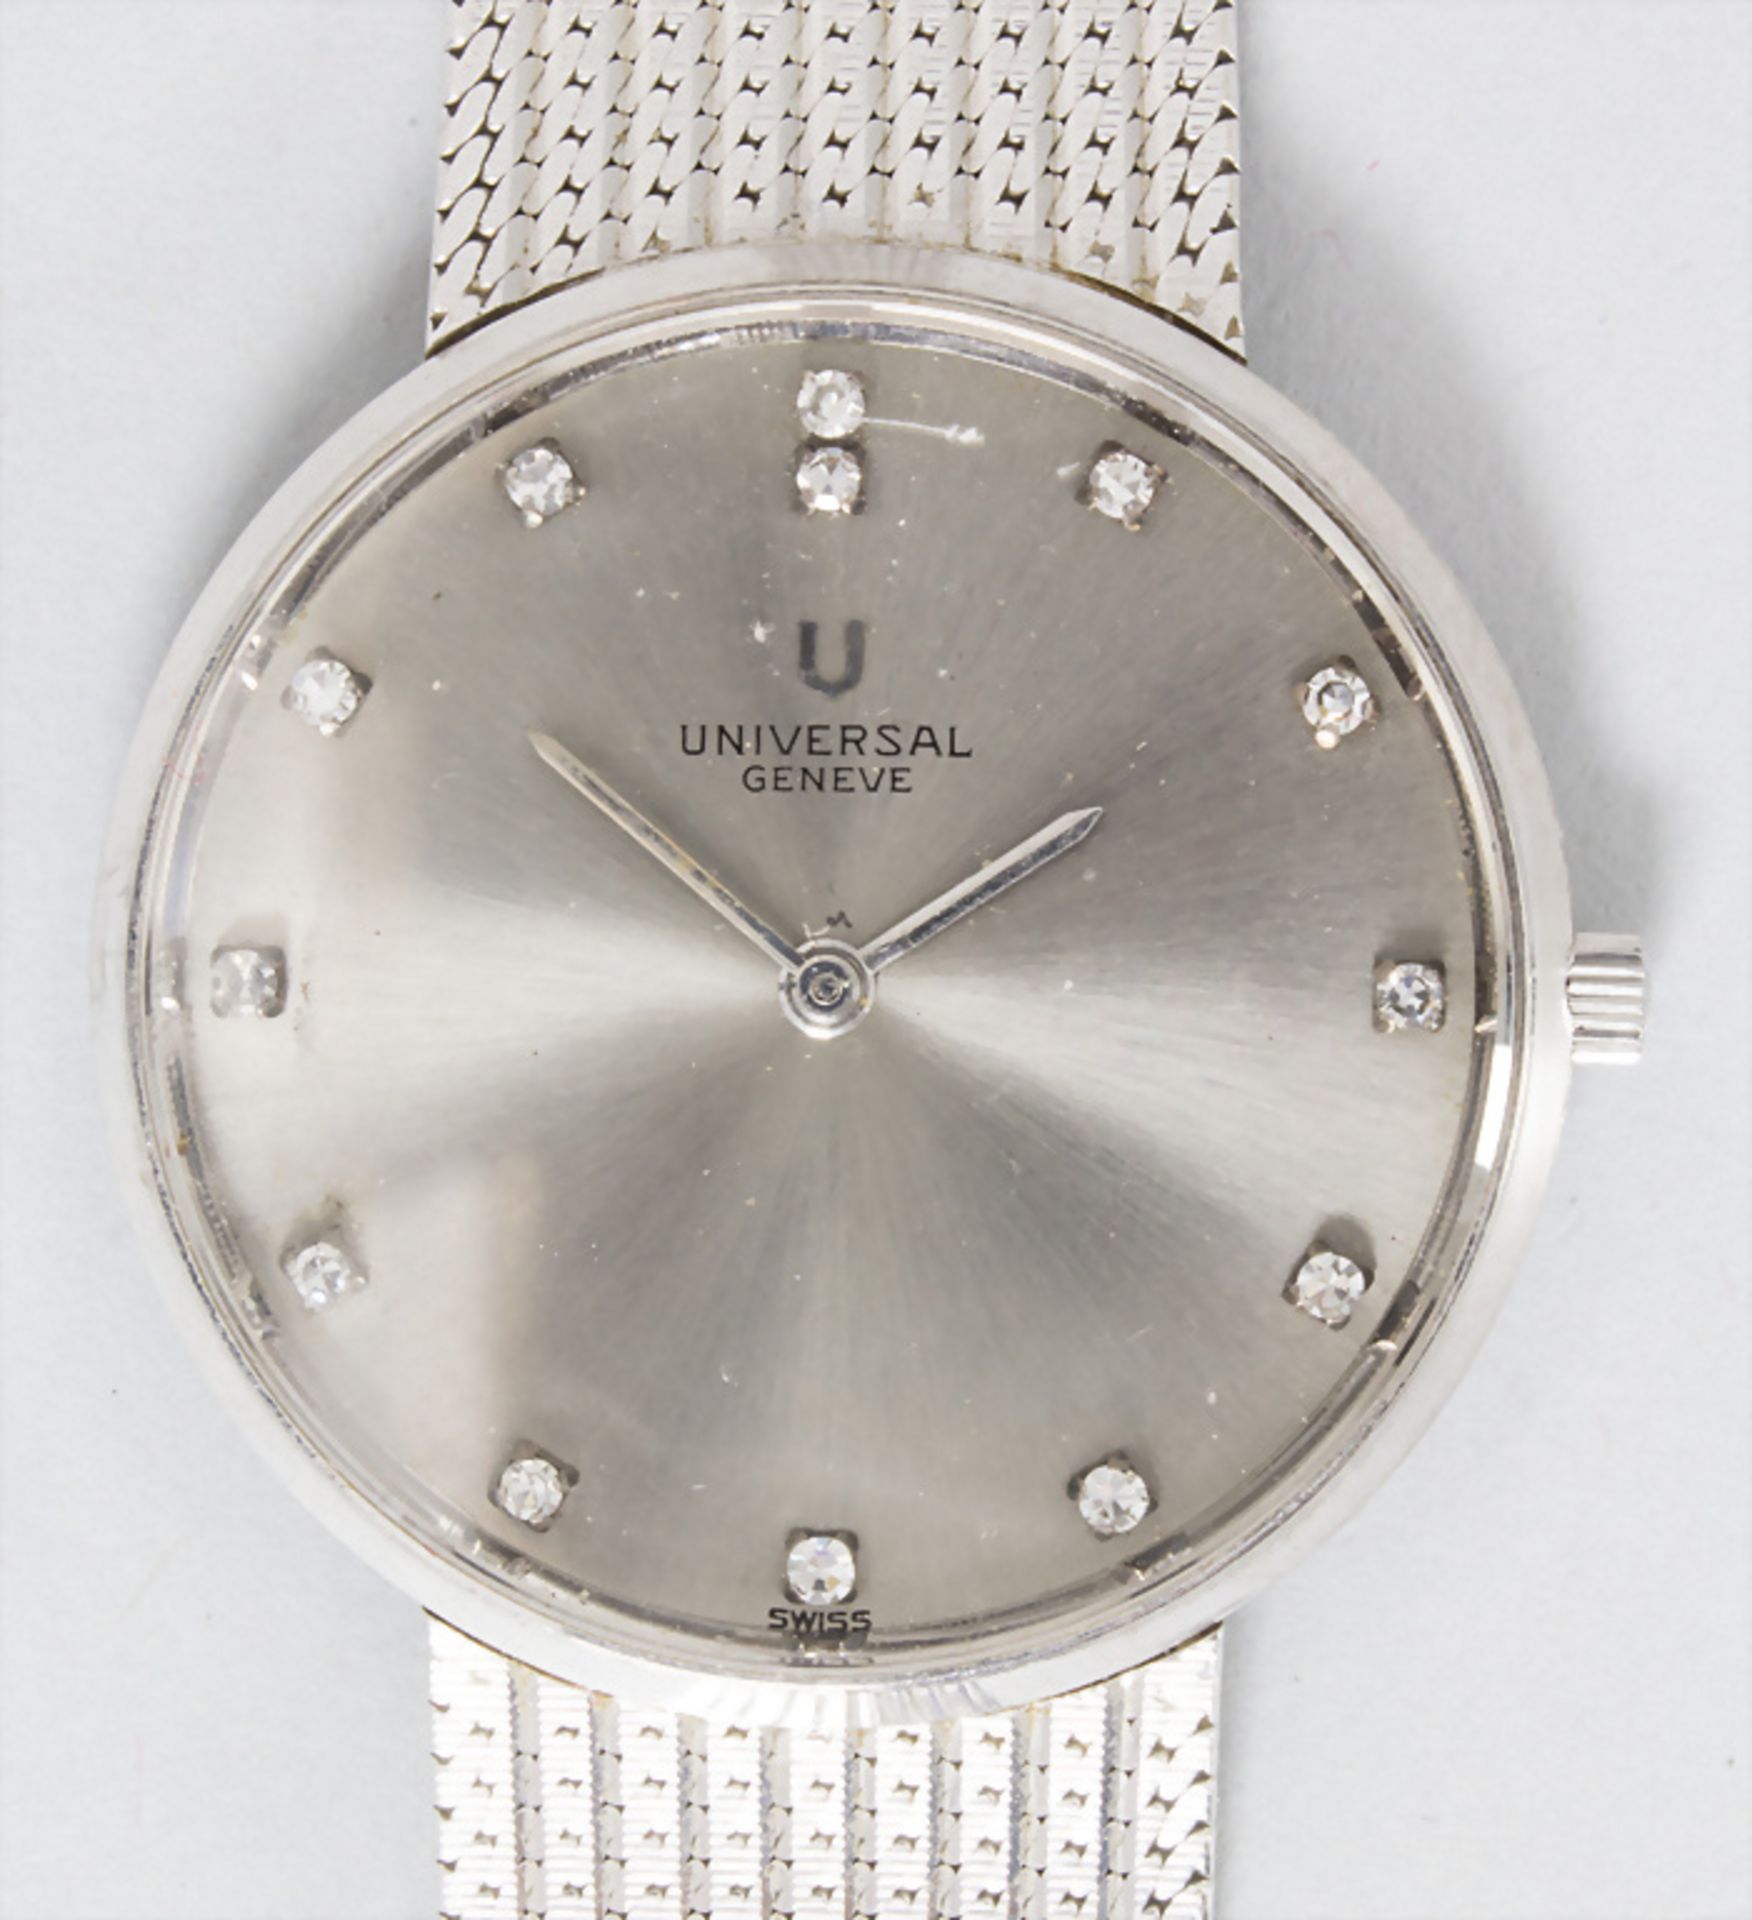 Herrenarmbanduhr / A men's wristwatch, Universal Géneve, Swiss, um 1970